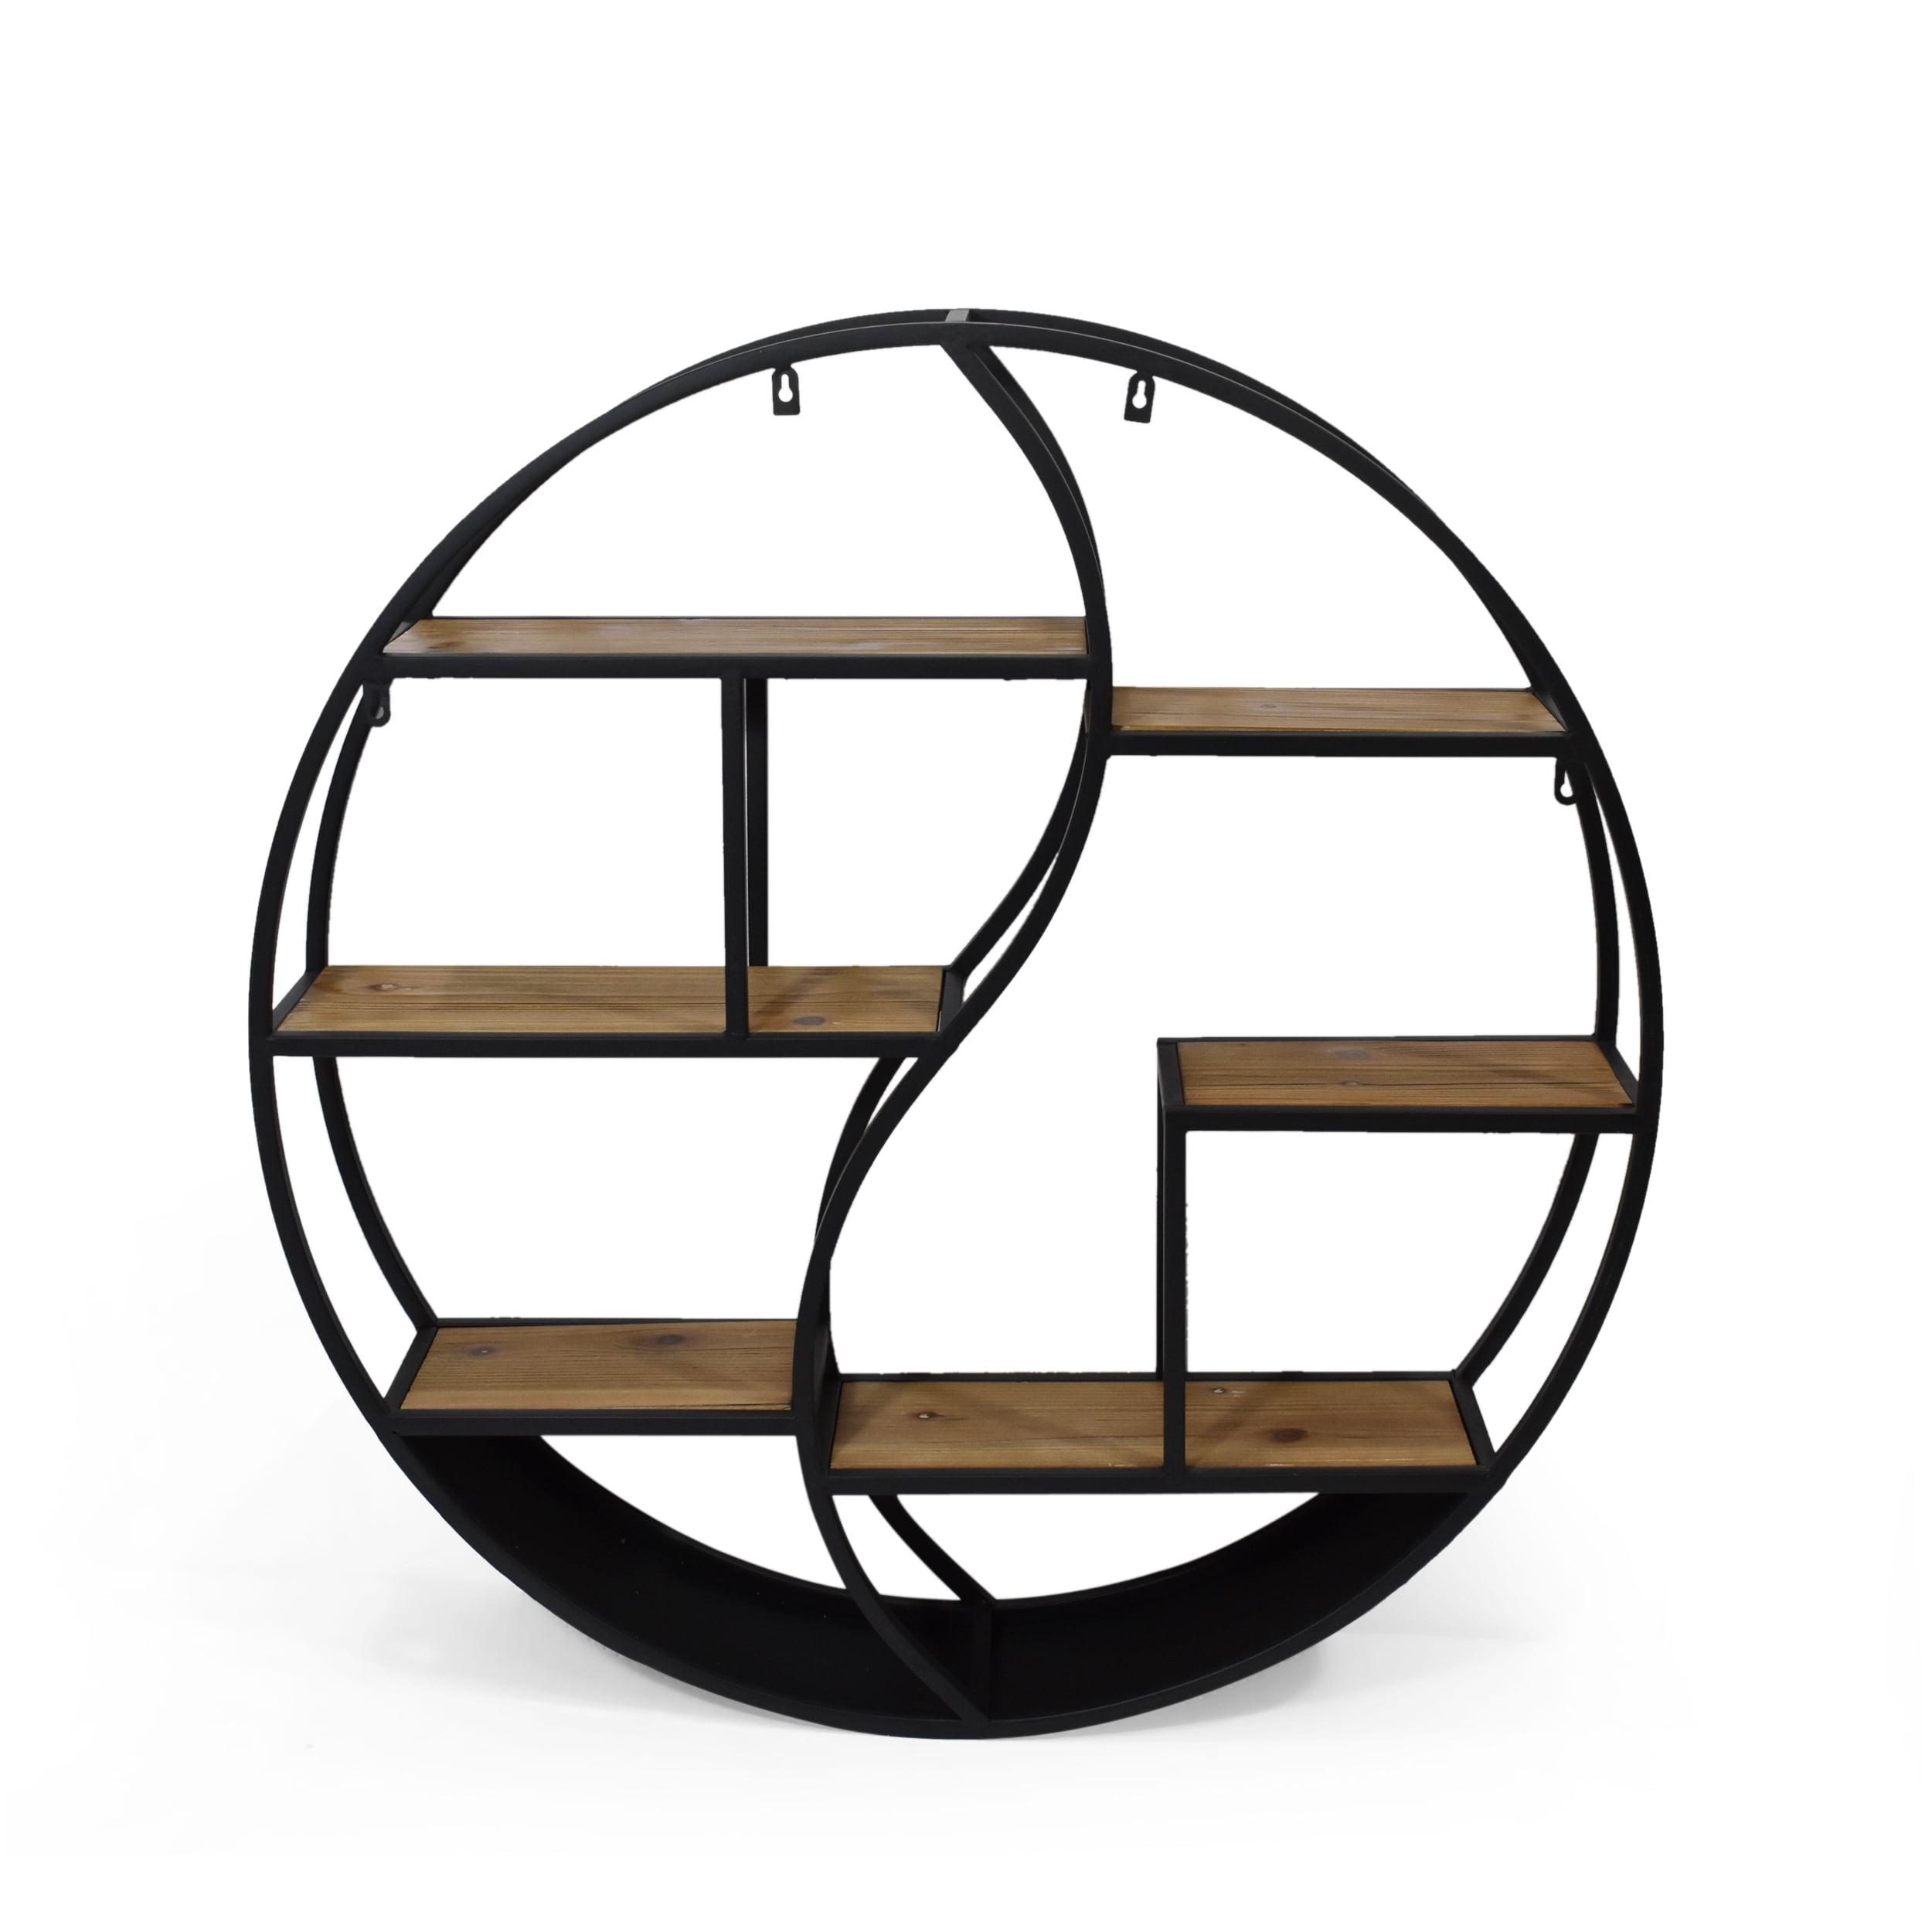 Modern Industrial Circular Iron and Fir Wood Wall Shelf - Black/Natural